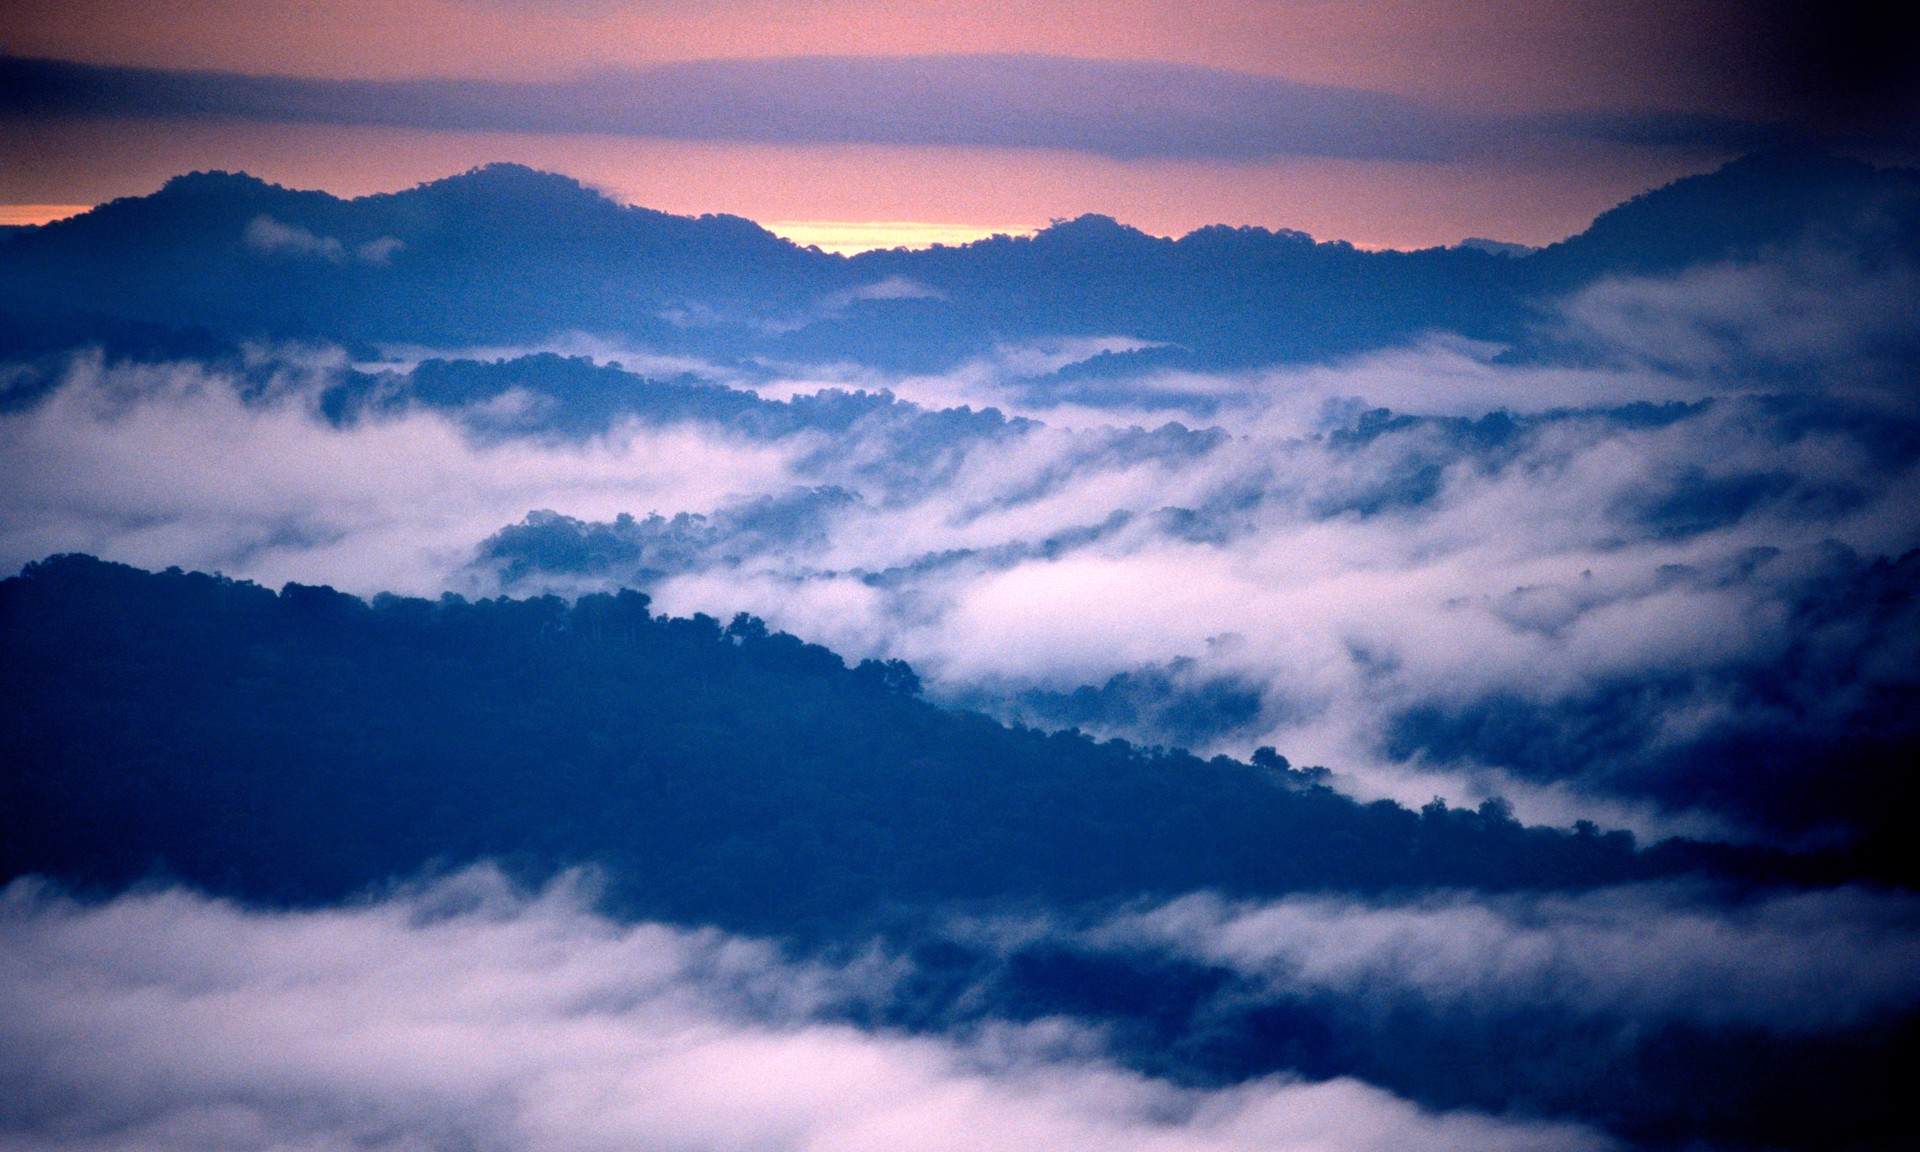 Mountains in Gabon by Carlton Ward Photography